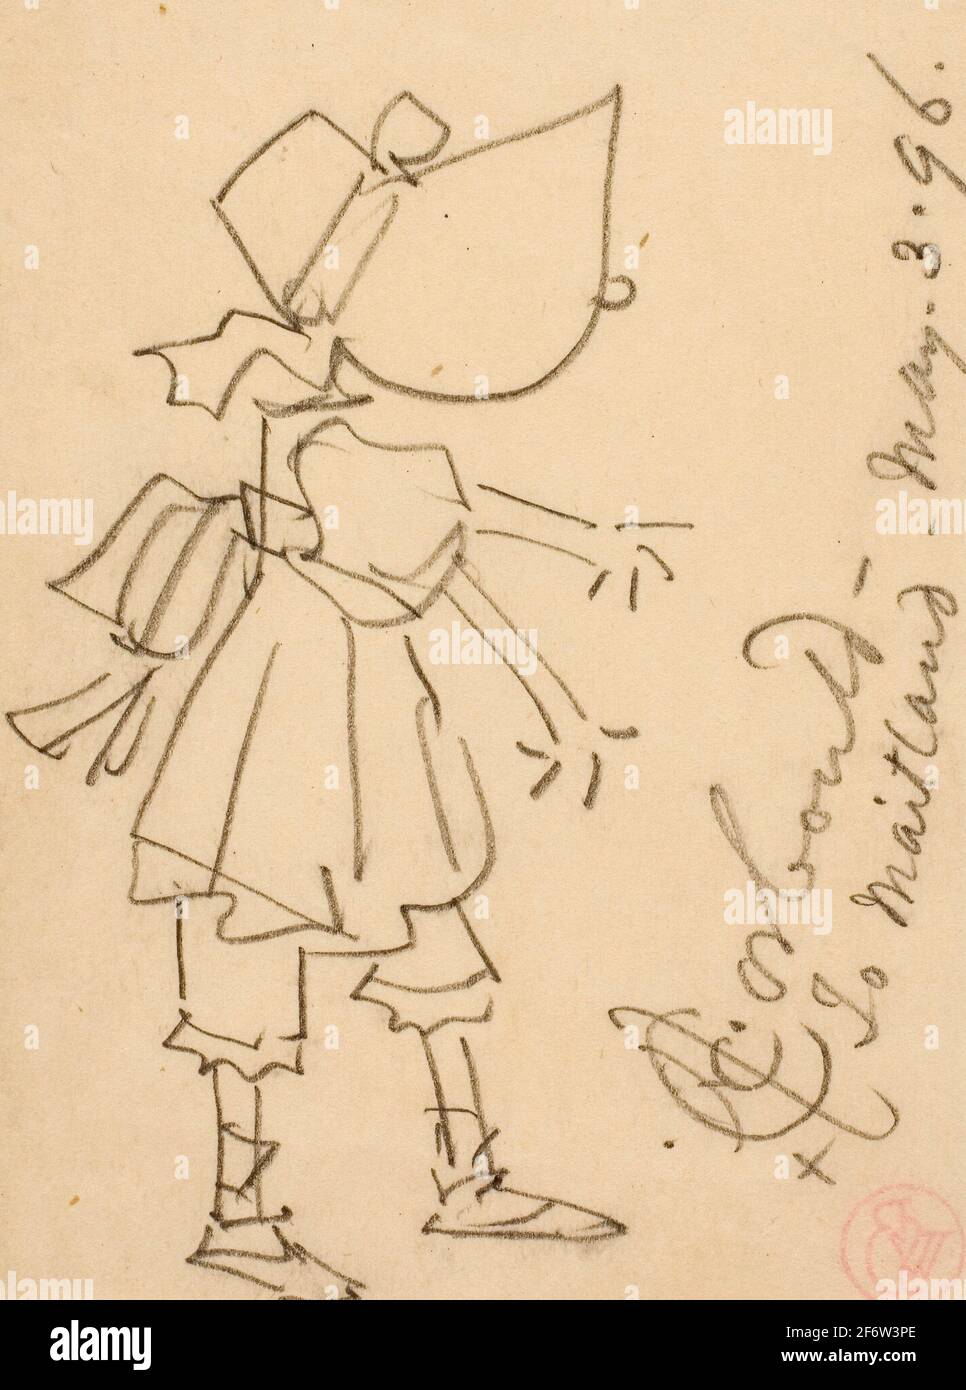 Author: Edward Henry Corbould. Girl in Bonnet - 1896 - Edward Henry Corbould English, 1815-1905. Graphite drawing on paper. England. Stock Photo